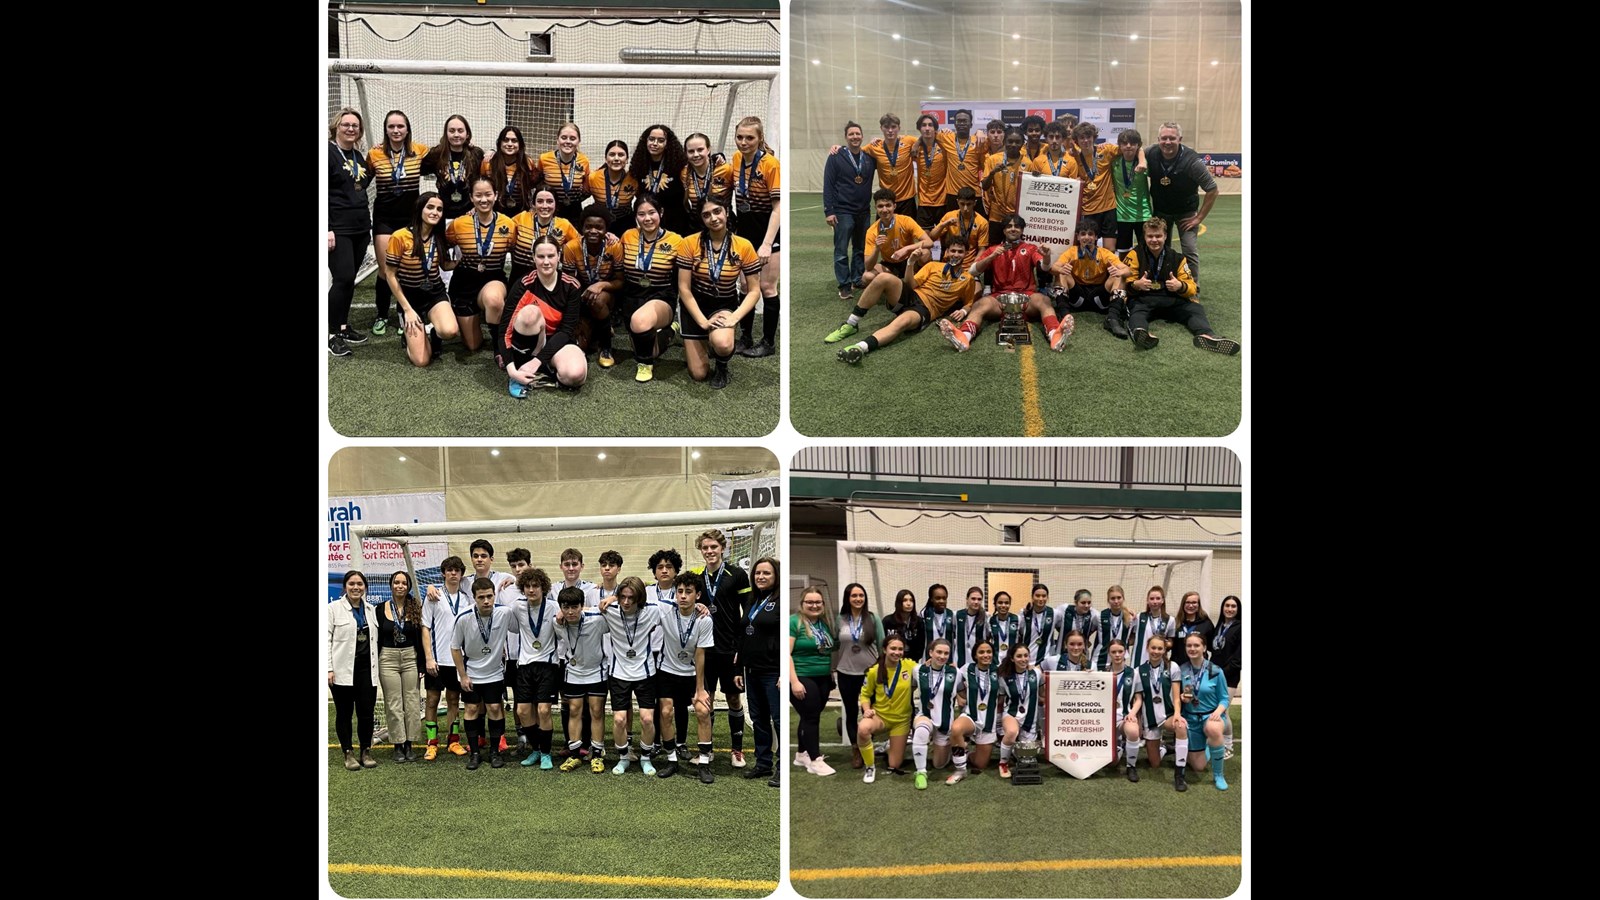 Winnipeg Youth Soccer Association